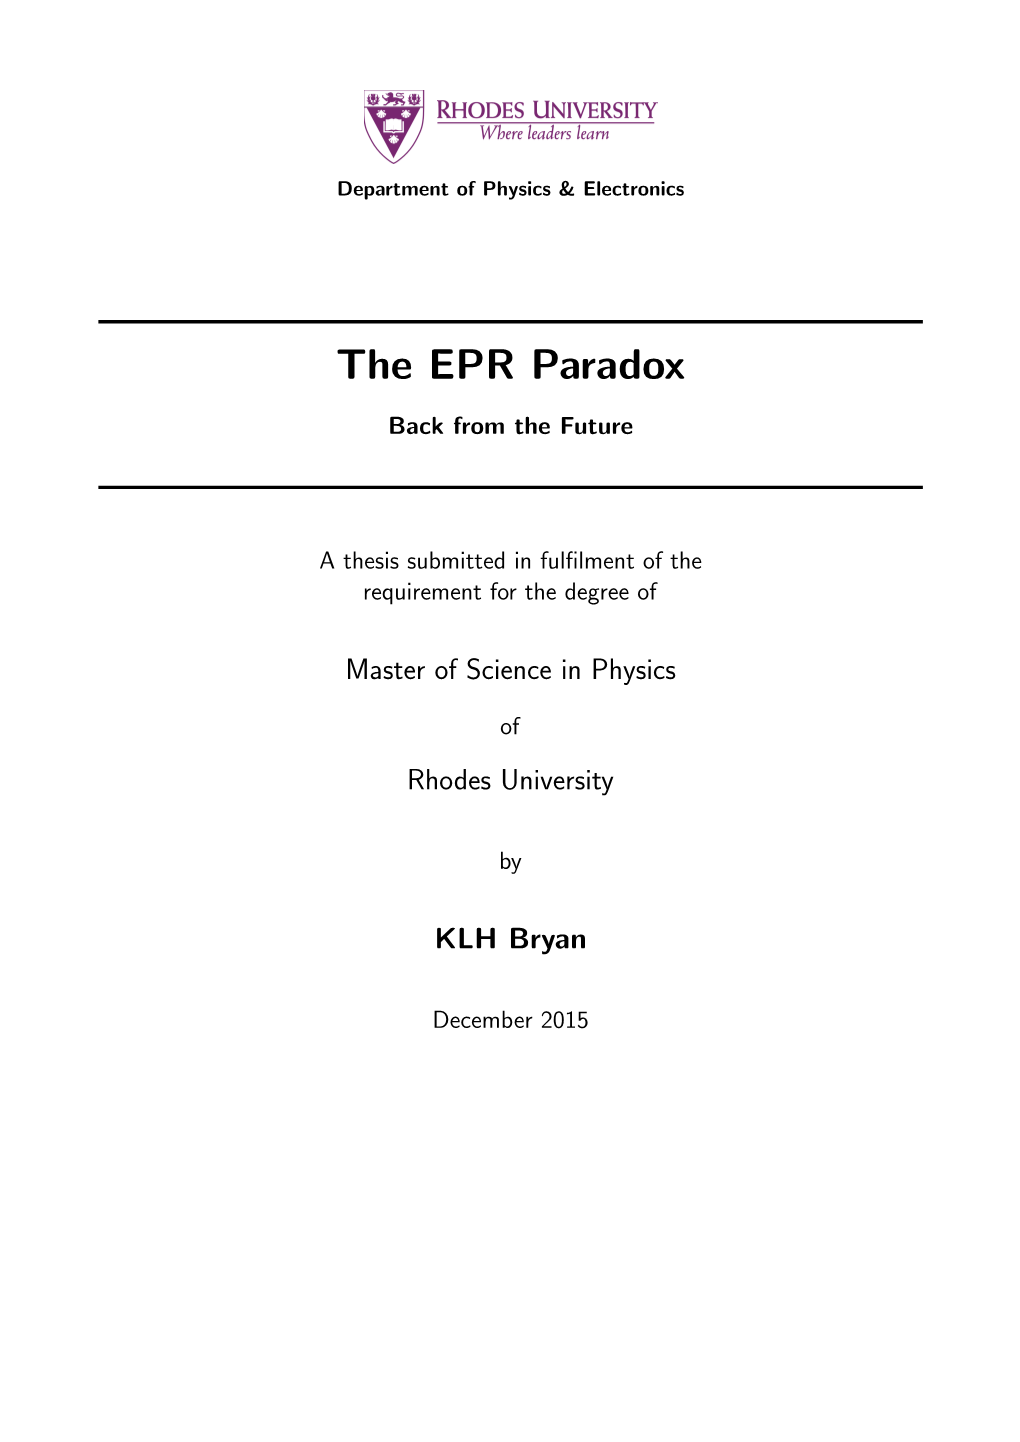 The EPR Paradox